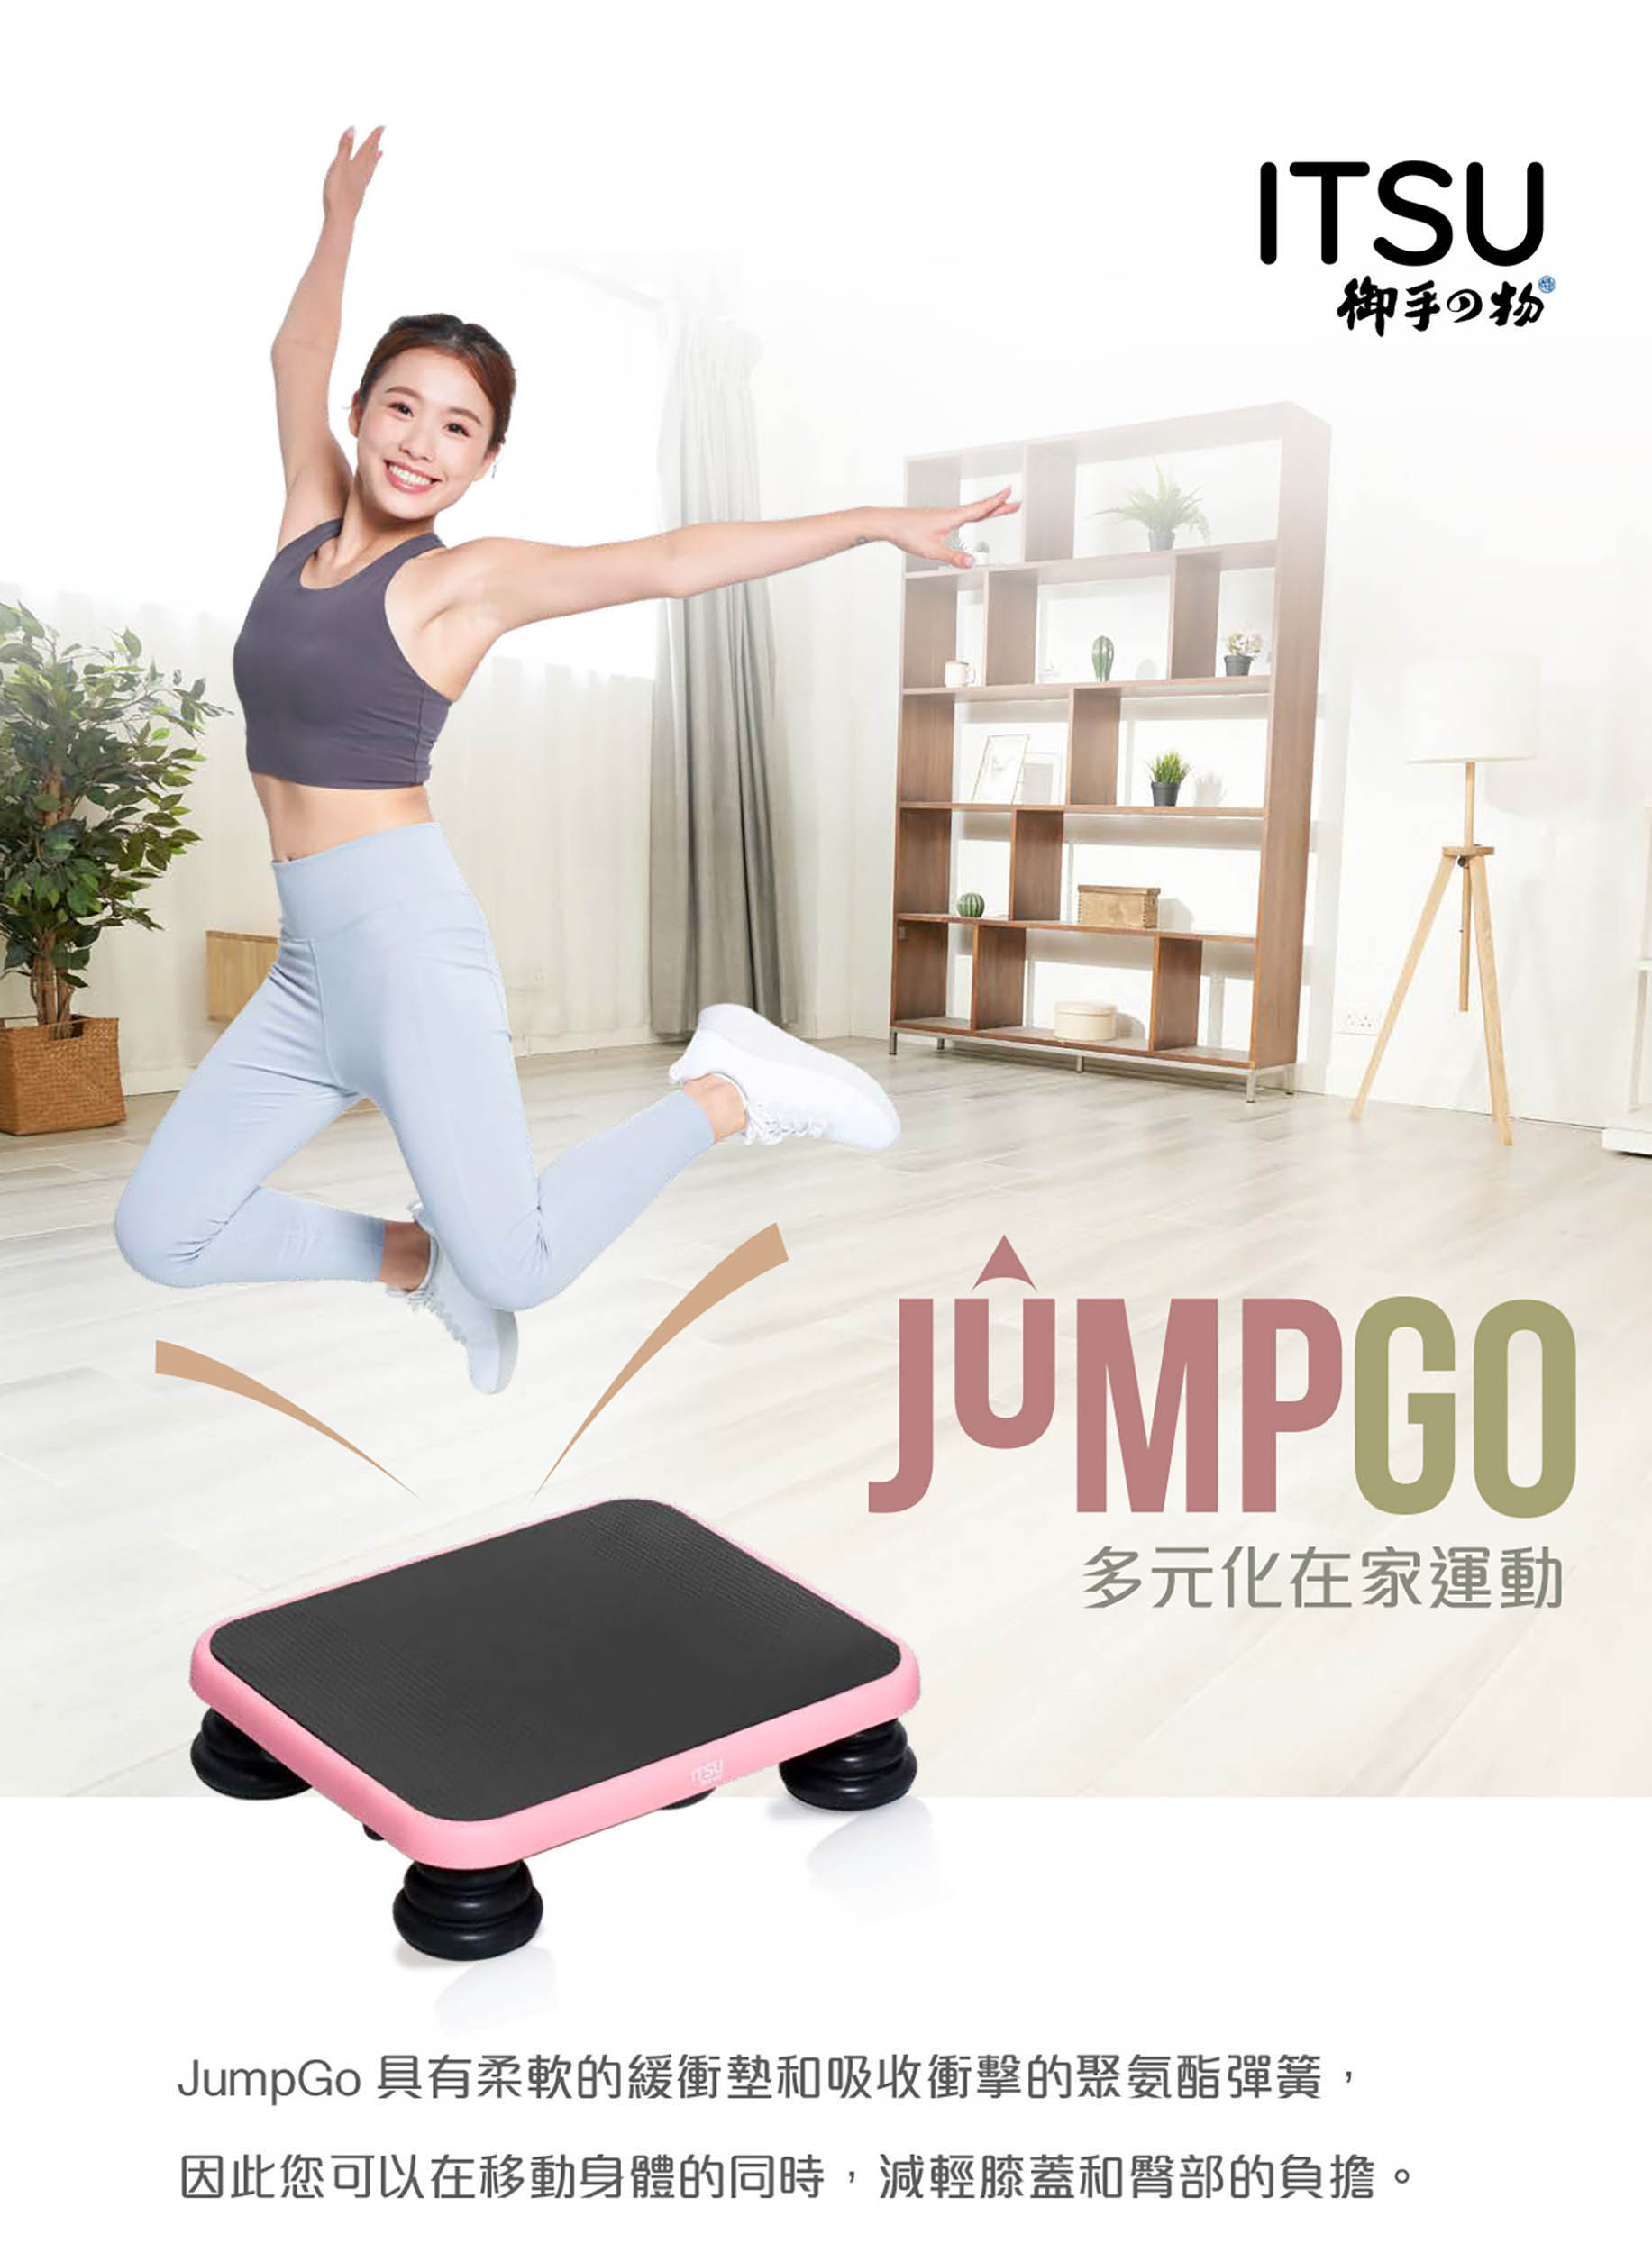 ITSU 御手の物 IS-0604-BK Jump Go (黑色)